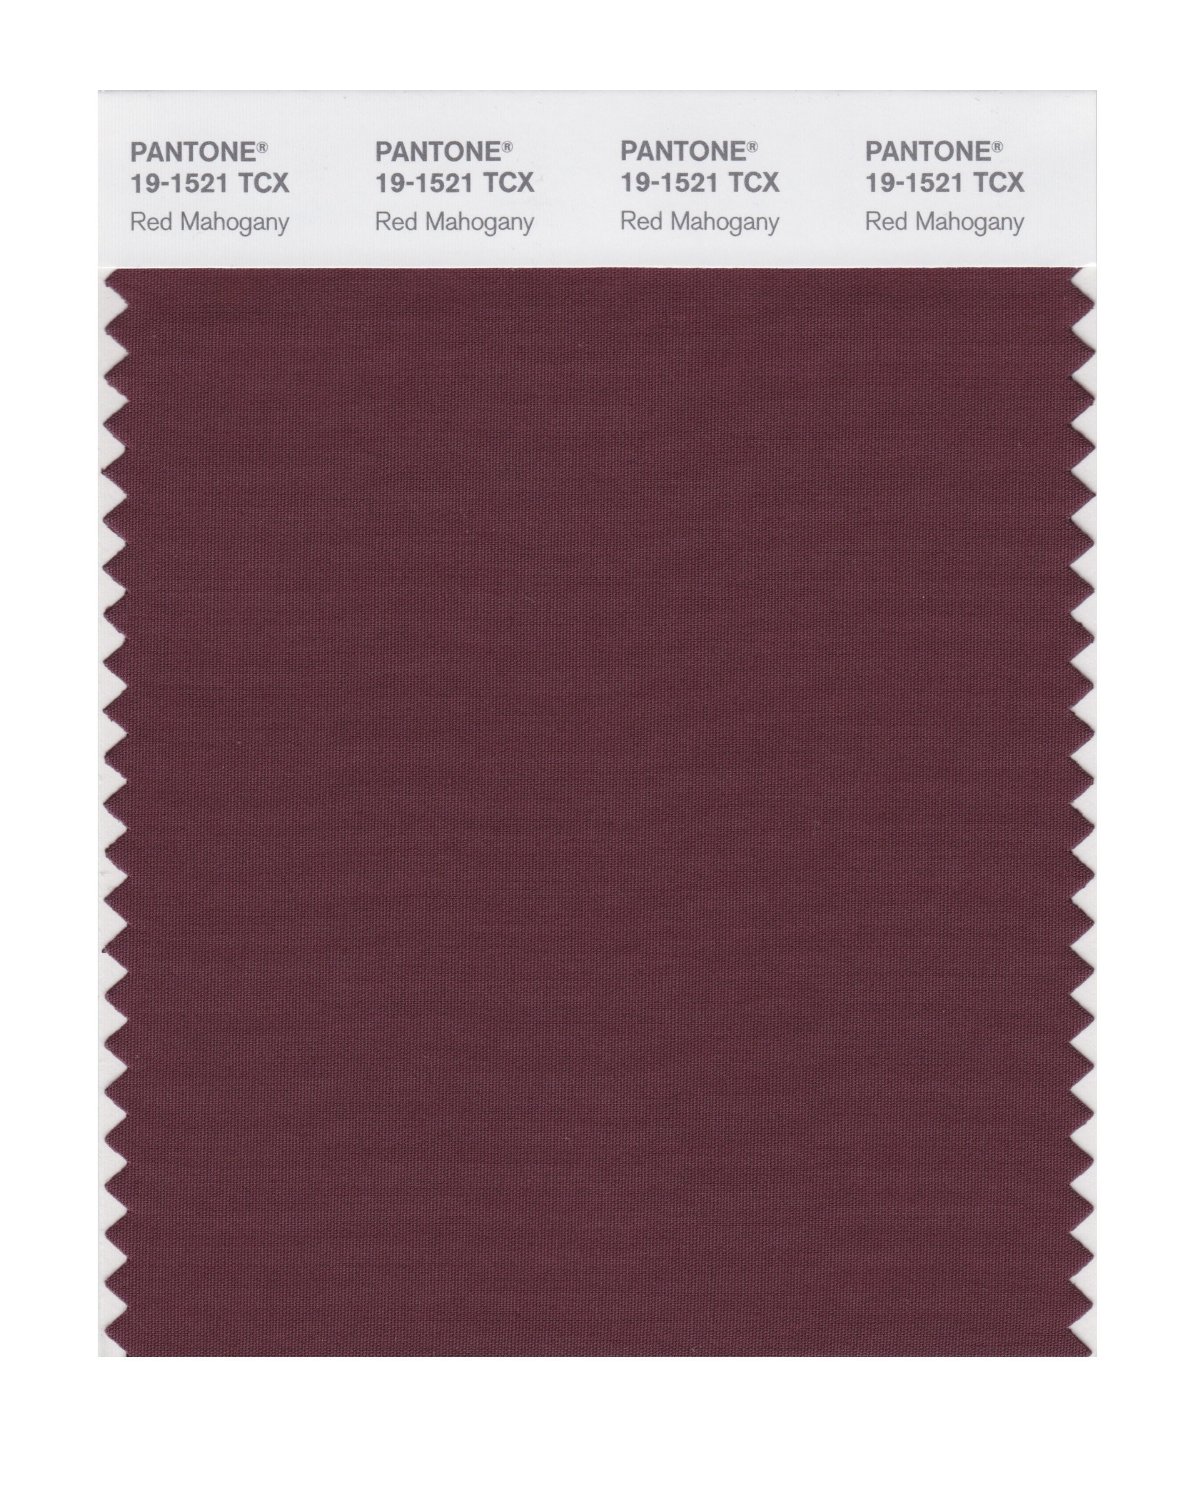 Pantone Cotton Swatch 19-1521 Red Mahogany